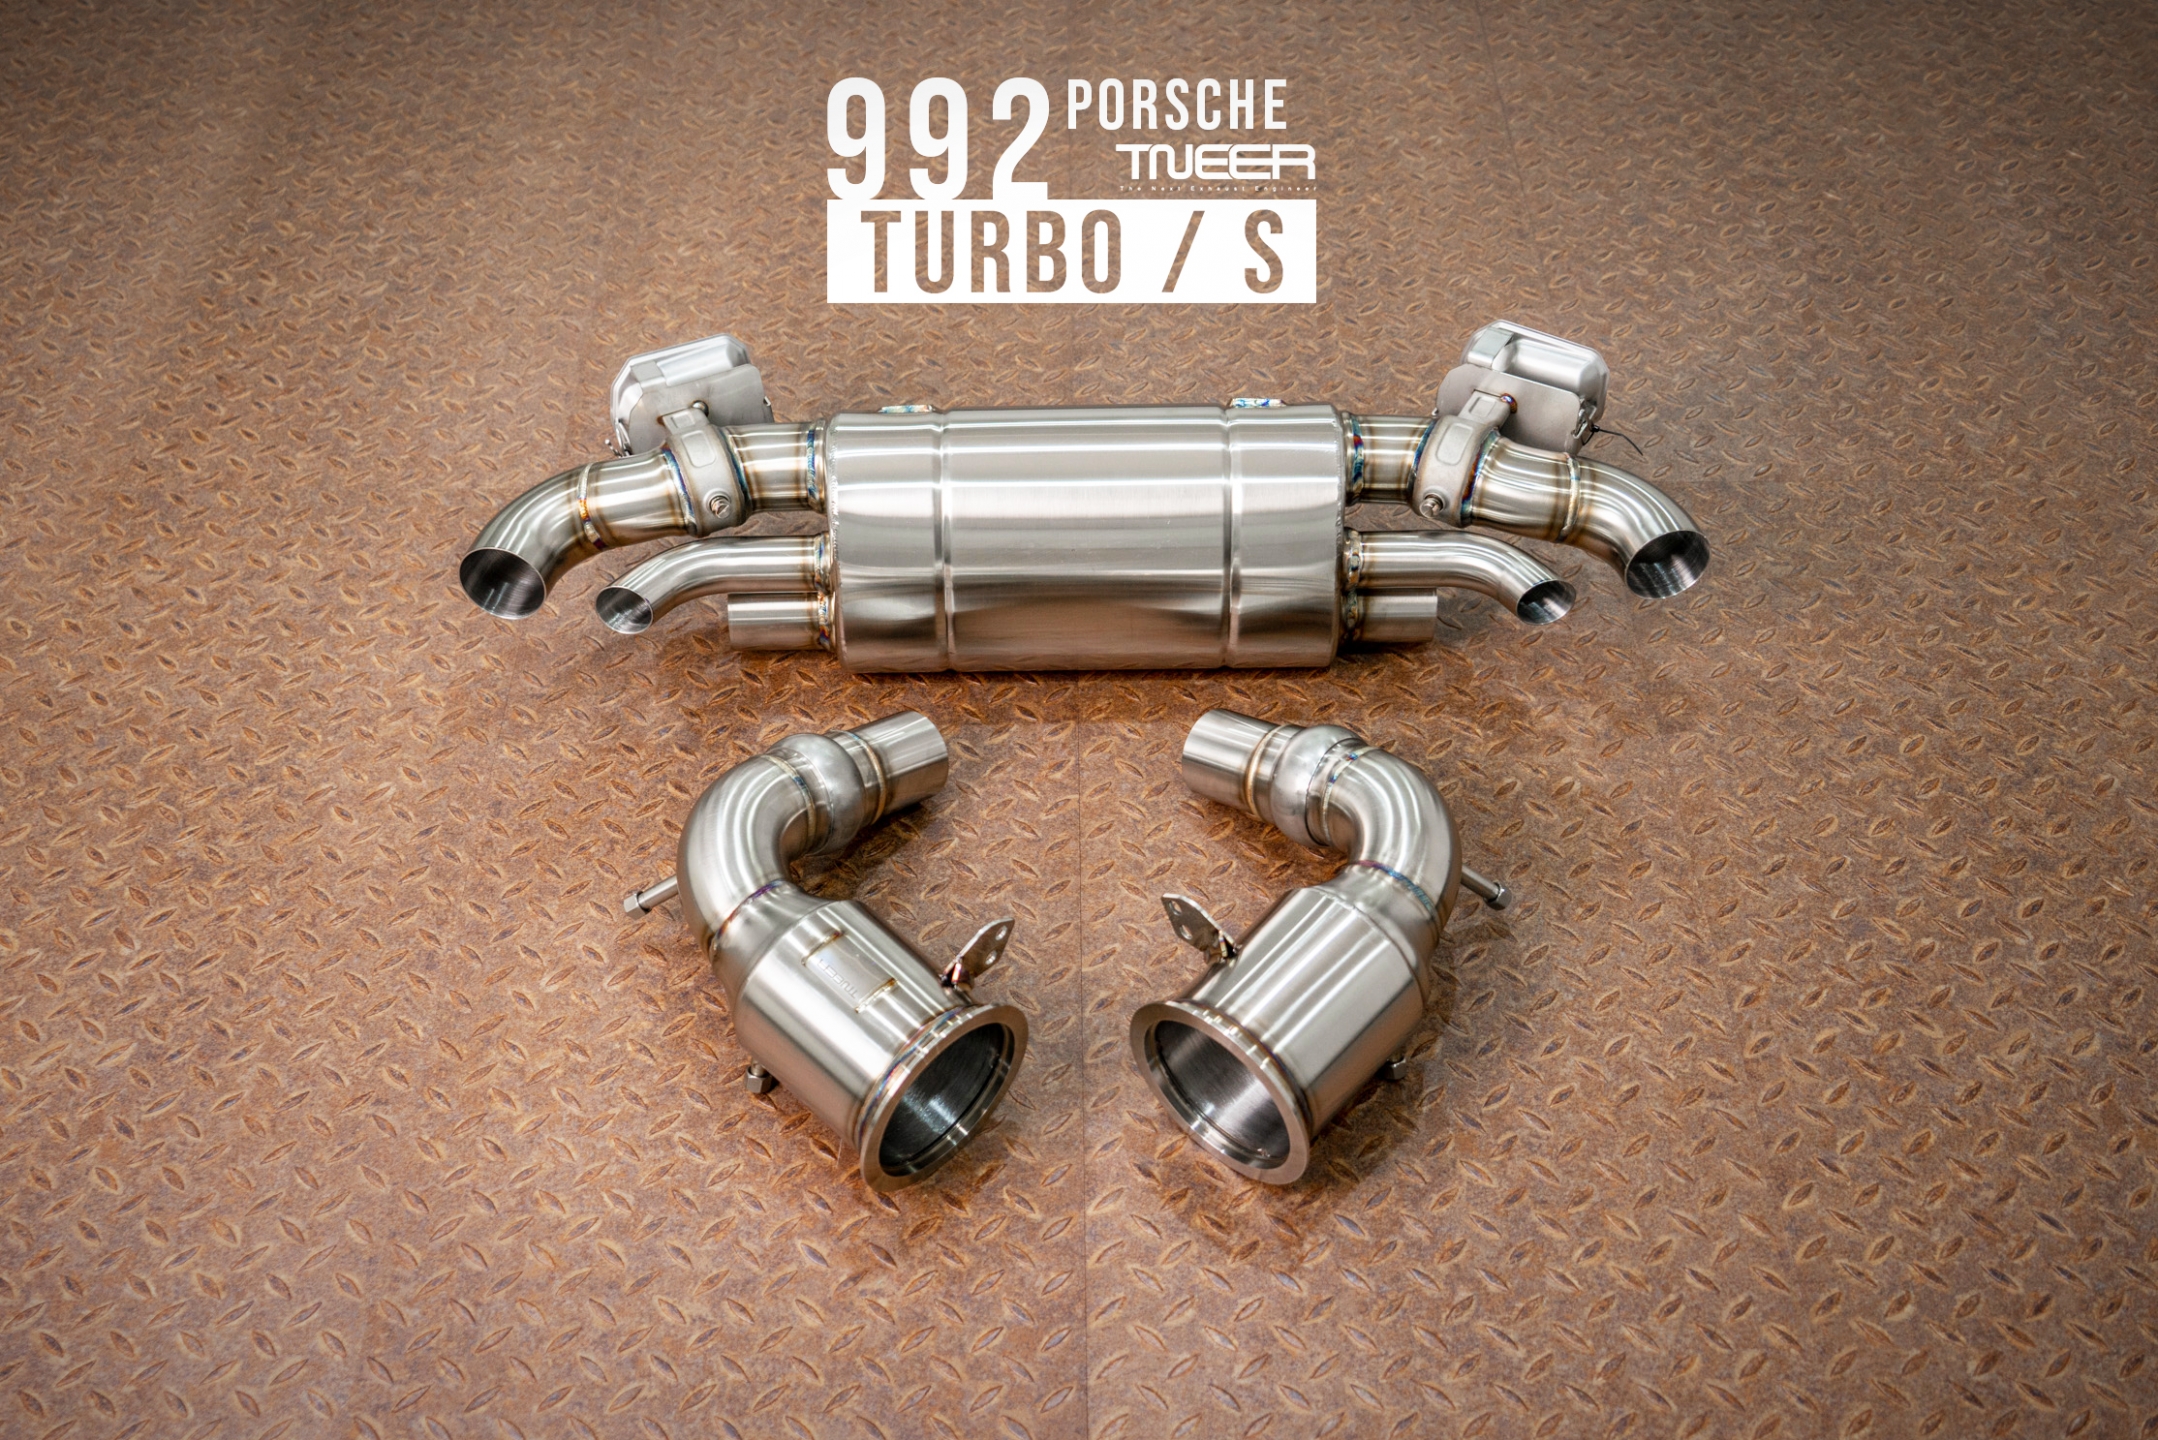 Porsche 992 Turbo / S TNEER Performance Exhaust System